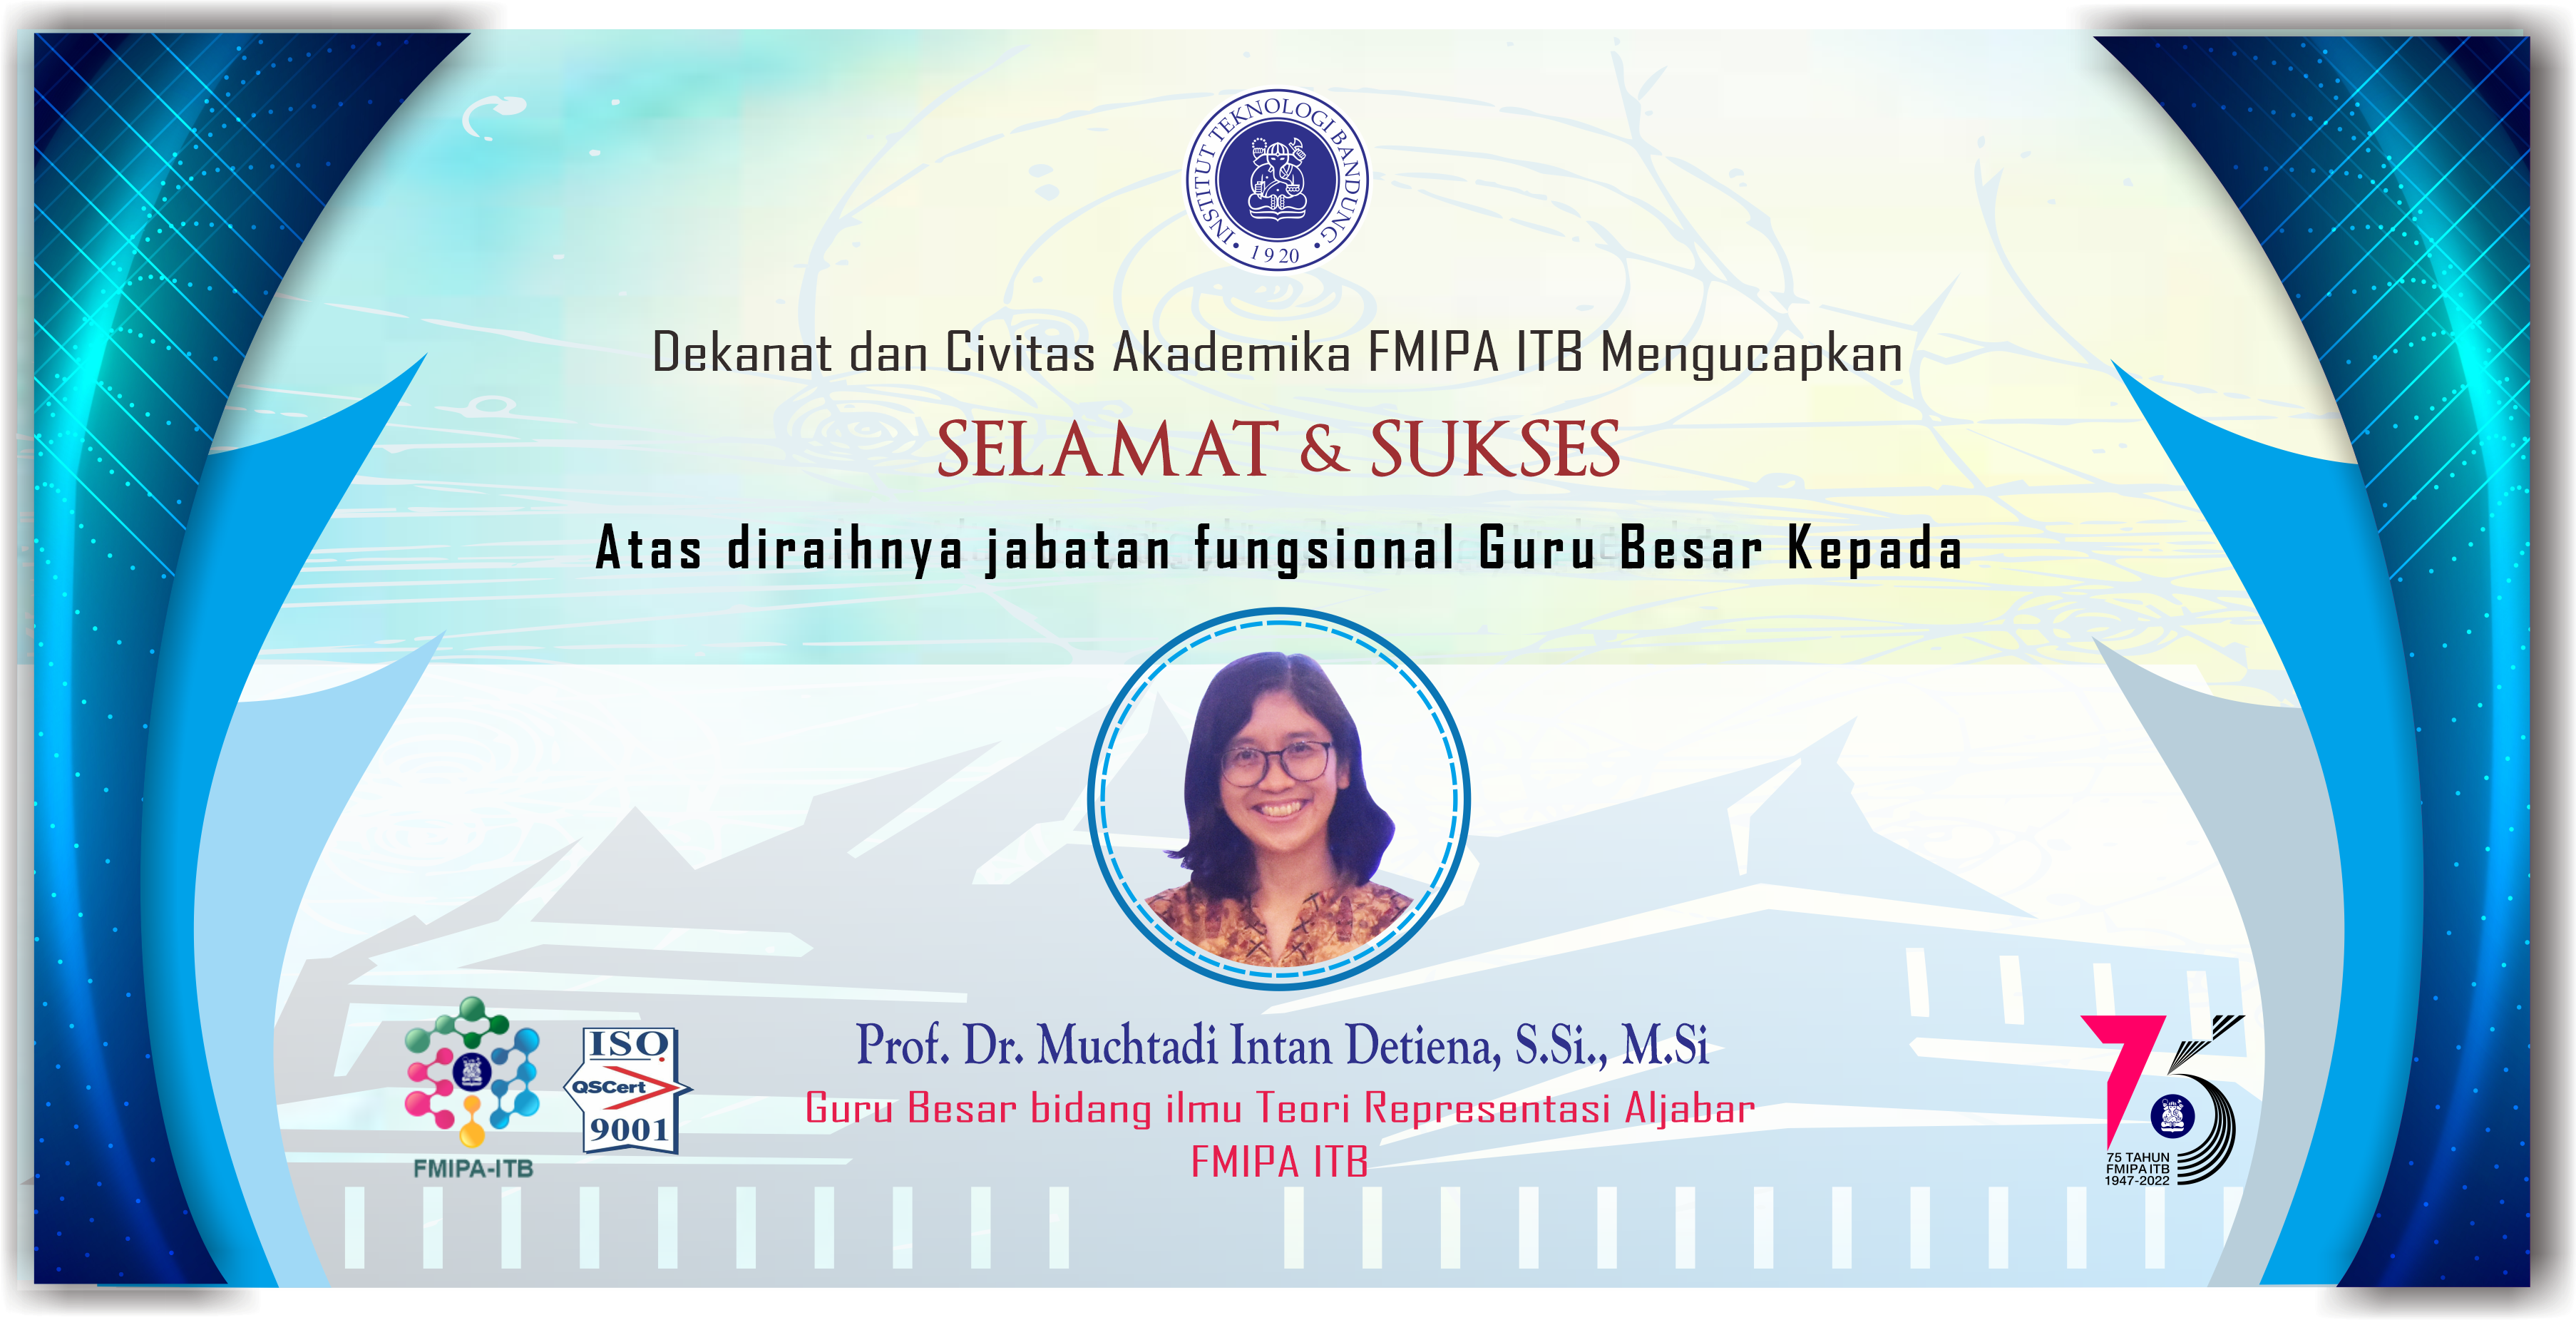 Jabatan Fungsional Guru Besar bidang ilmu Teori Representasi Aljabar FMIPA ITB, Prof. Dr. Muchtadi Intan Detiena, S.Si., M.Si.